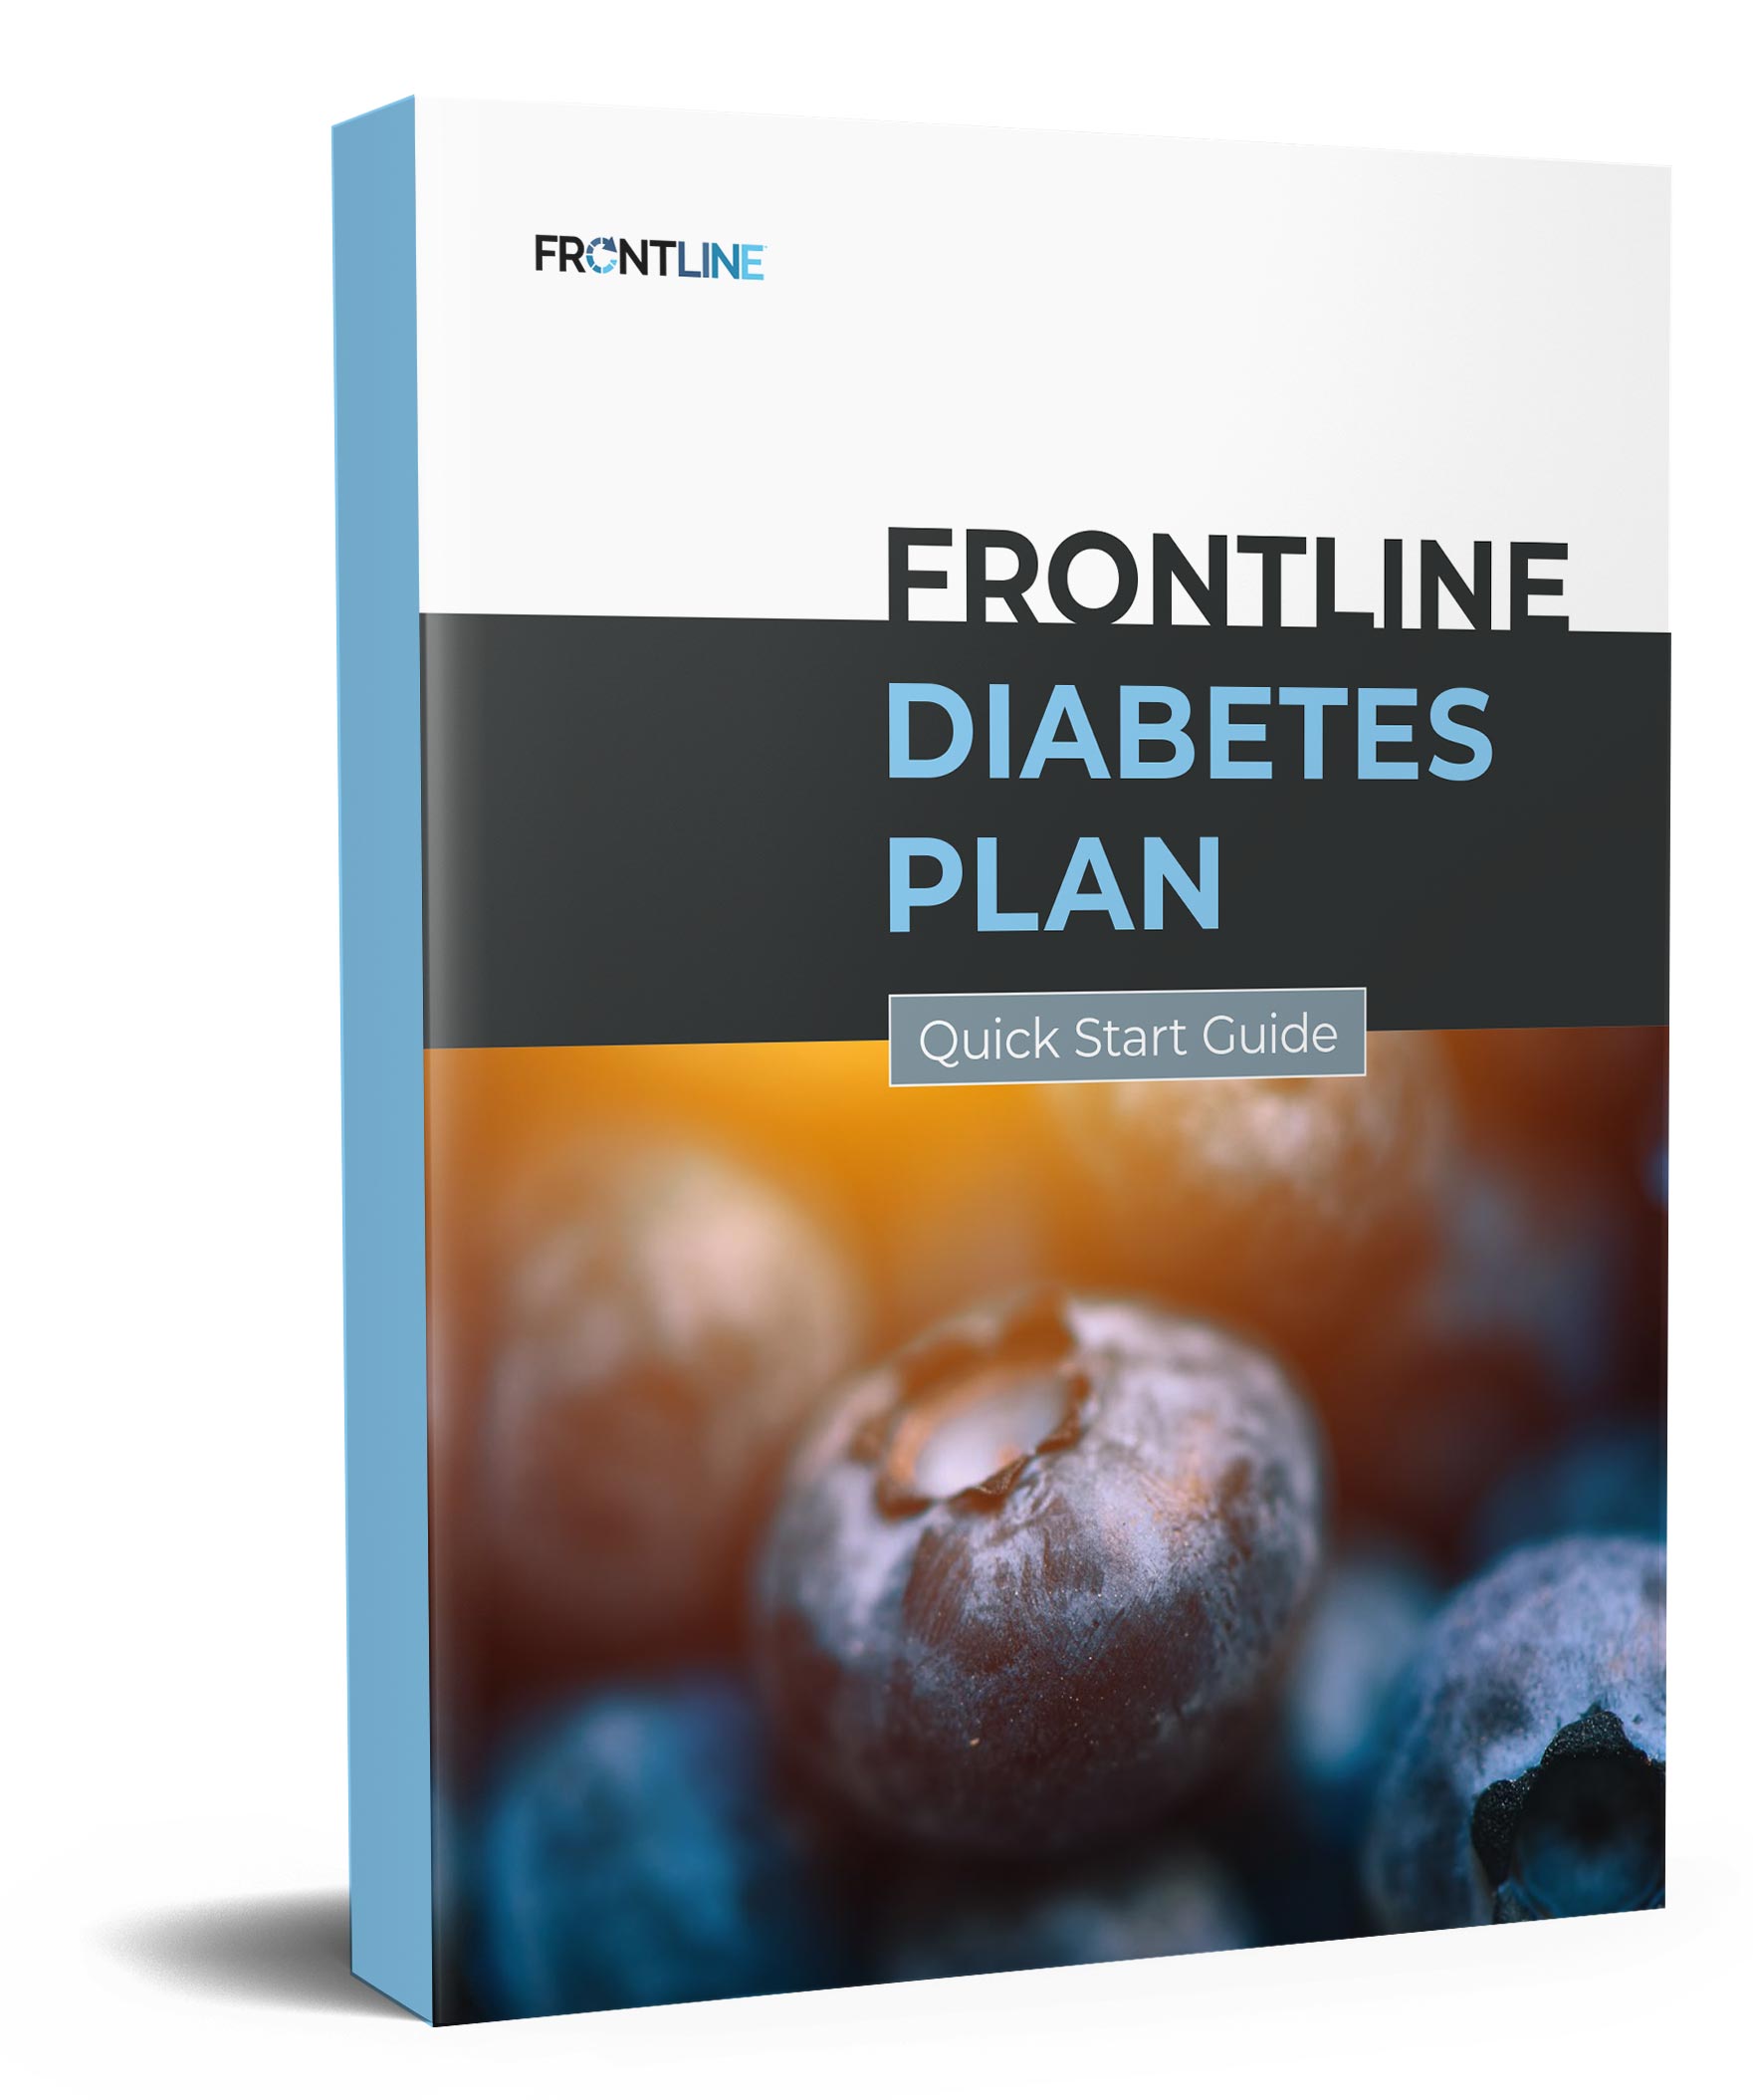 Frontline Diabetes Plan Quick Start Guide